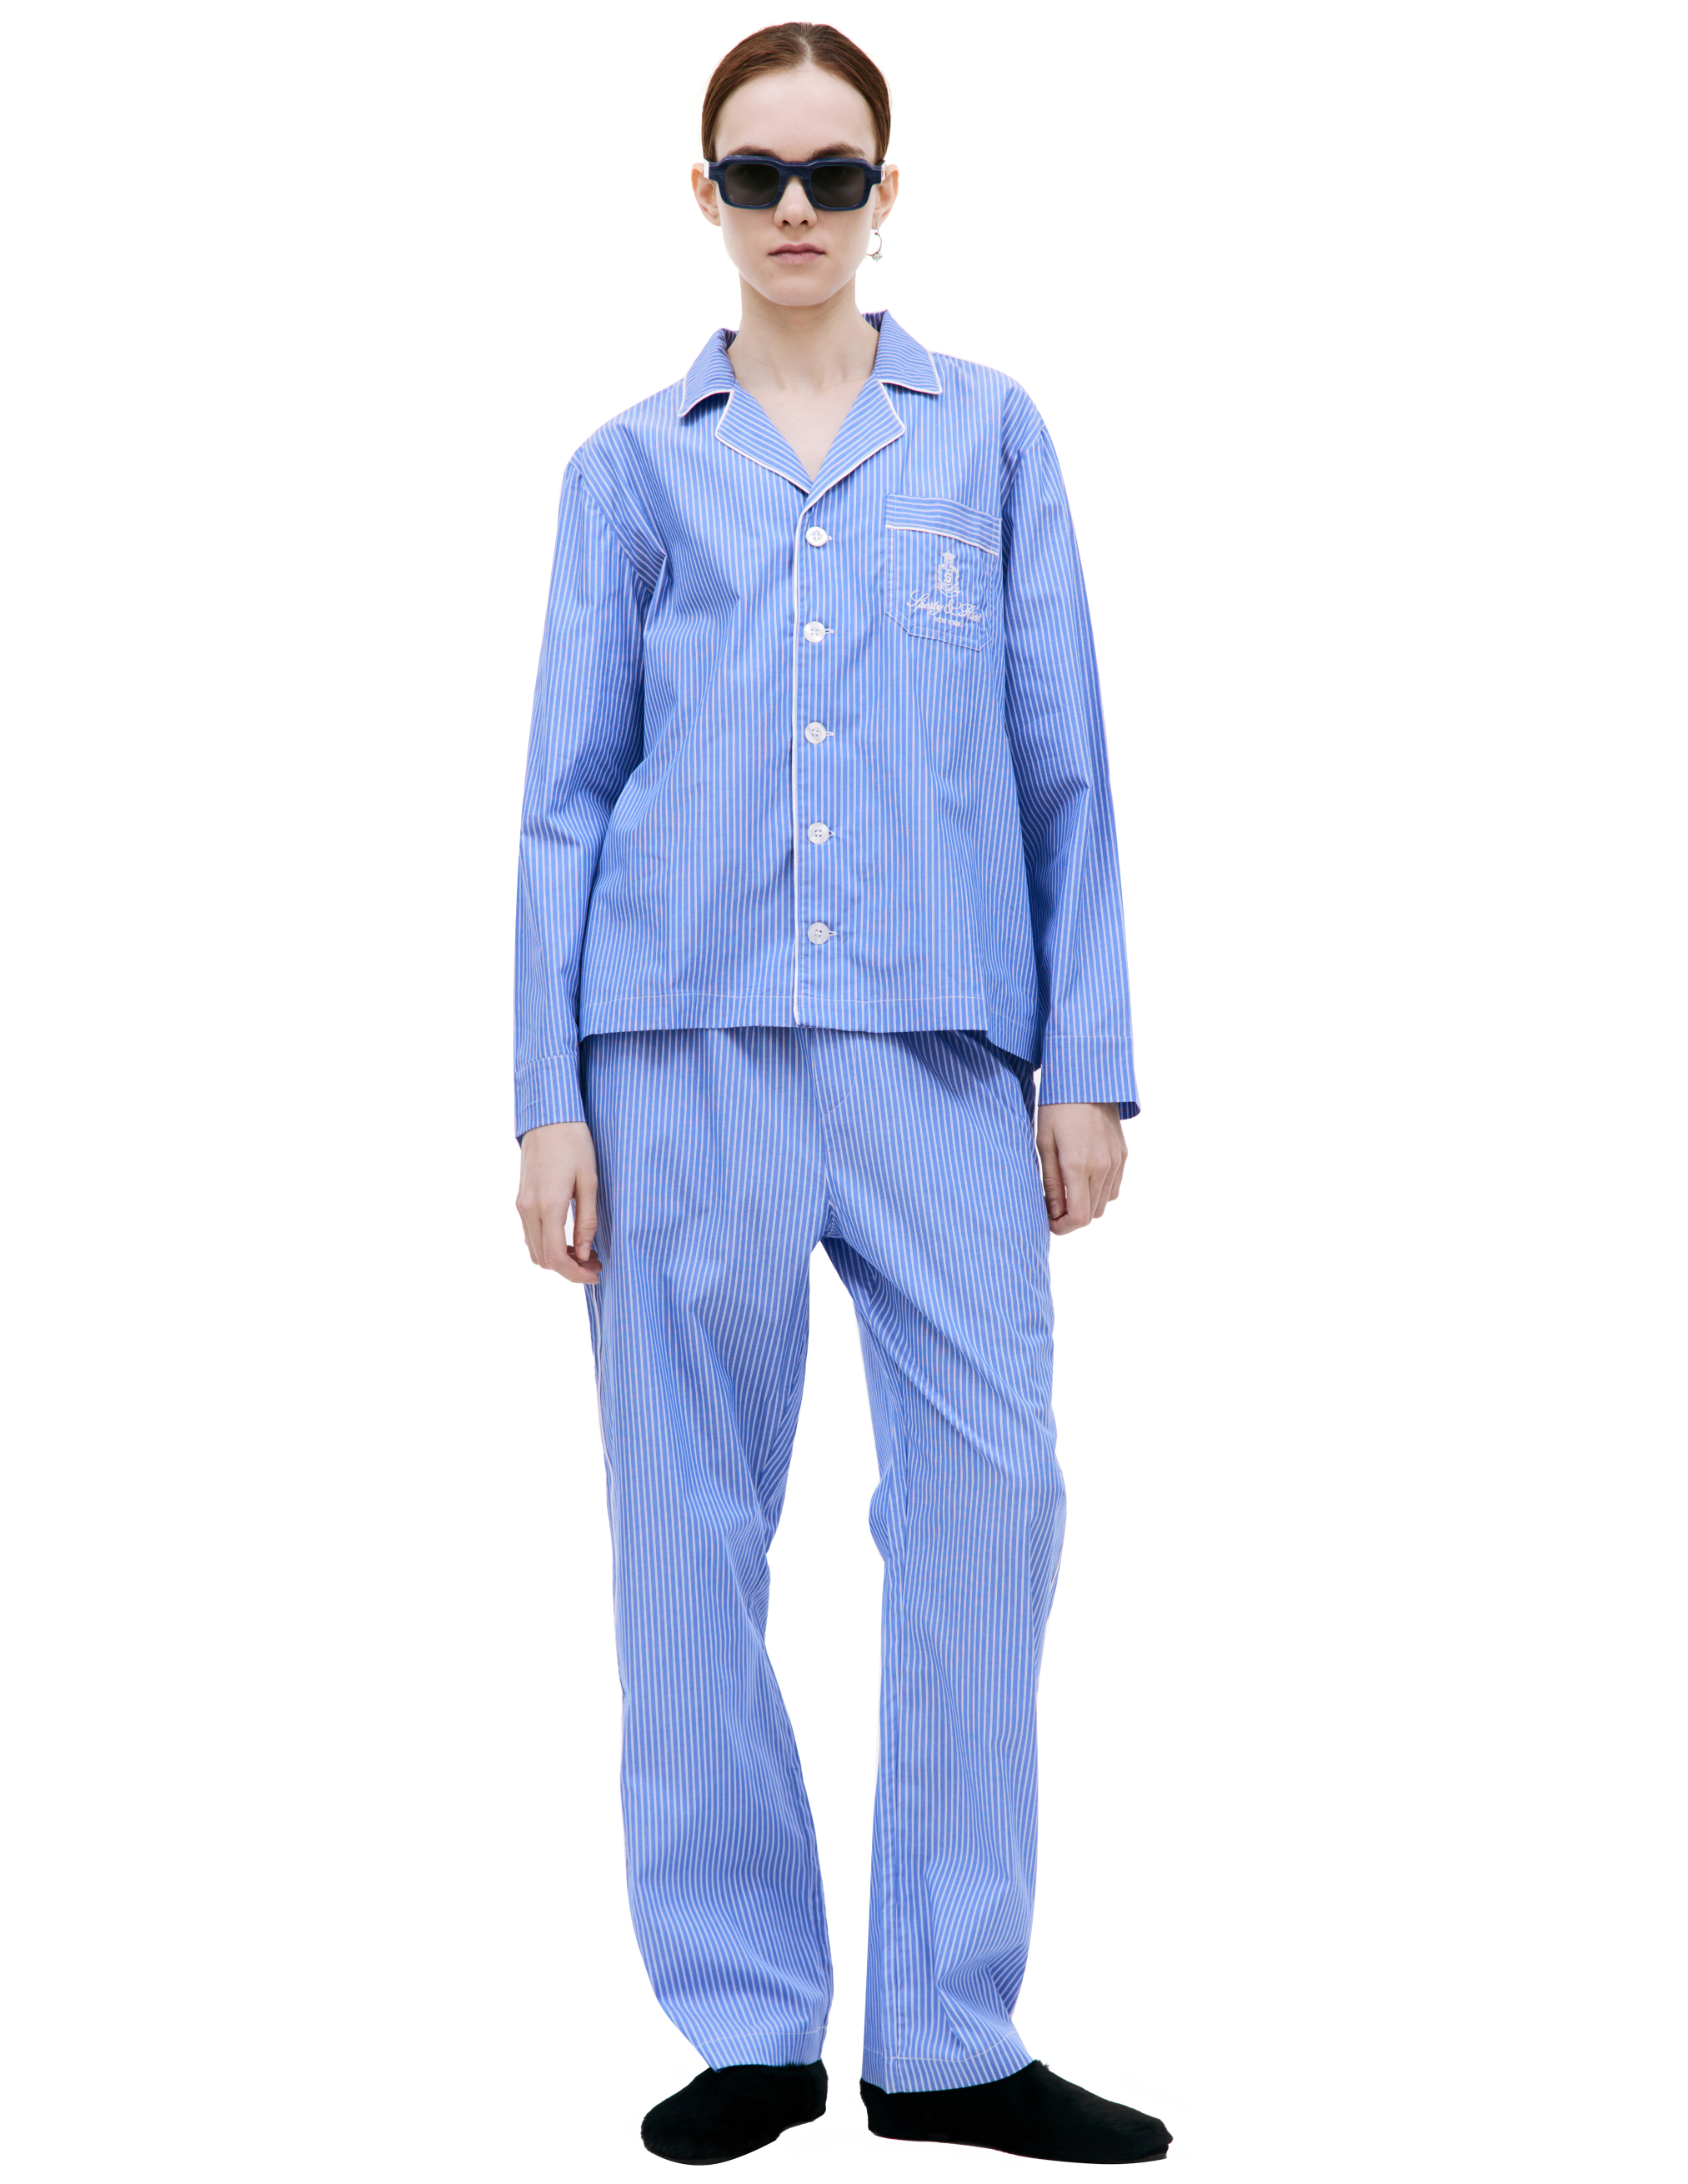 Пижамная рубашка в полоску SPORTY & RICH PJAW235BL, размер S;M;L;XL